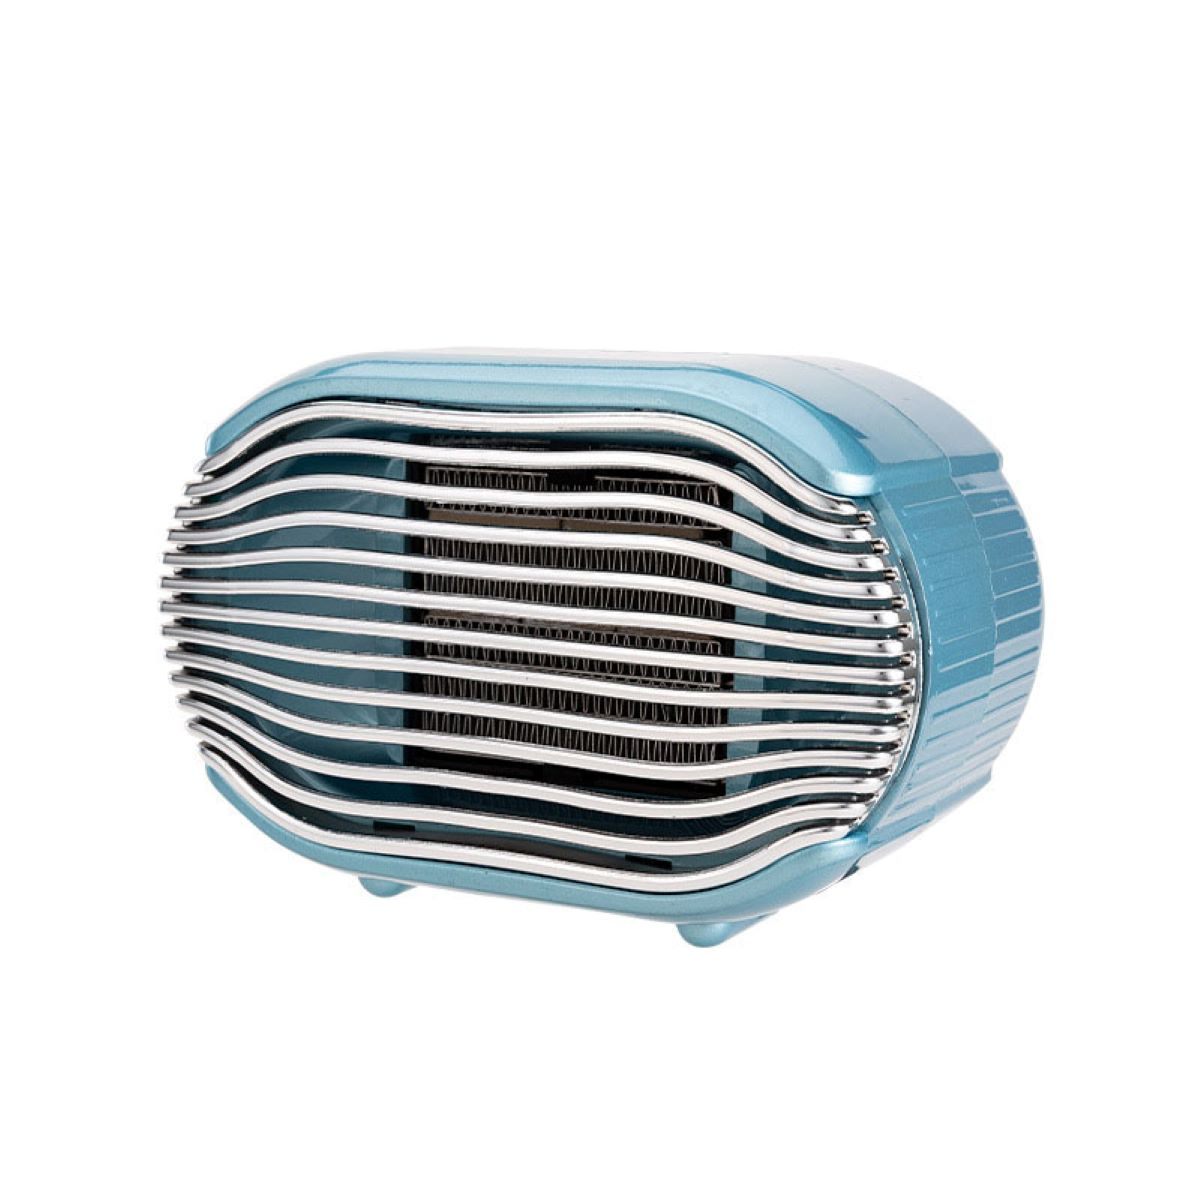 LACAMAX Blaue PTC-Keramik-Heizung - leise (800 schnelle Raumgröße: Watt, m²) 10 Wärme, Wärme Heizlüfter